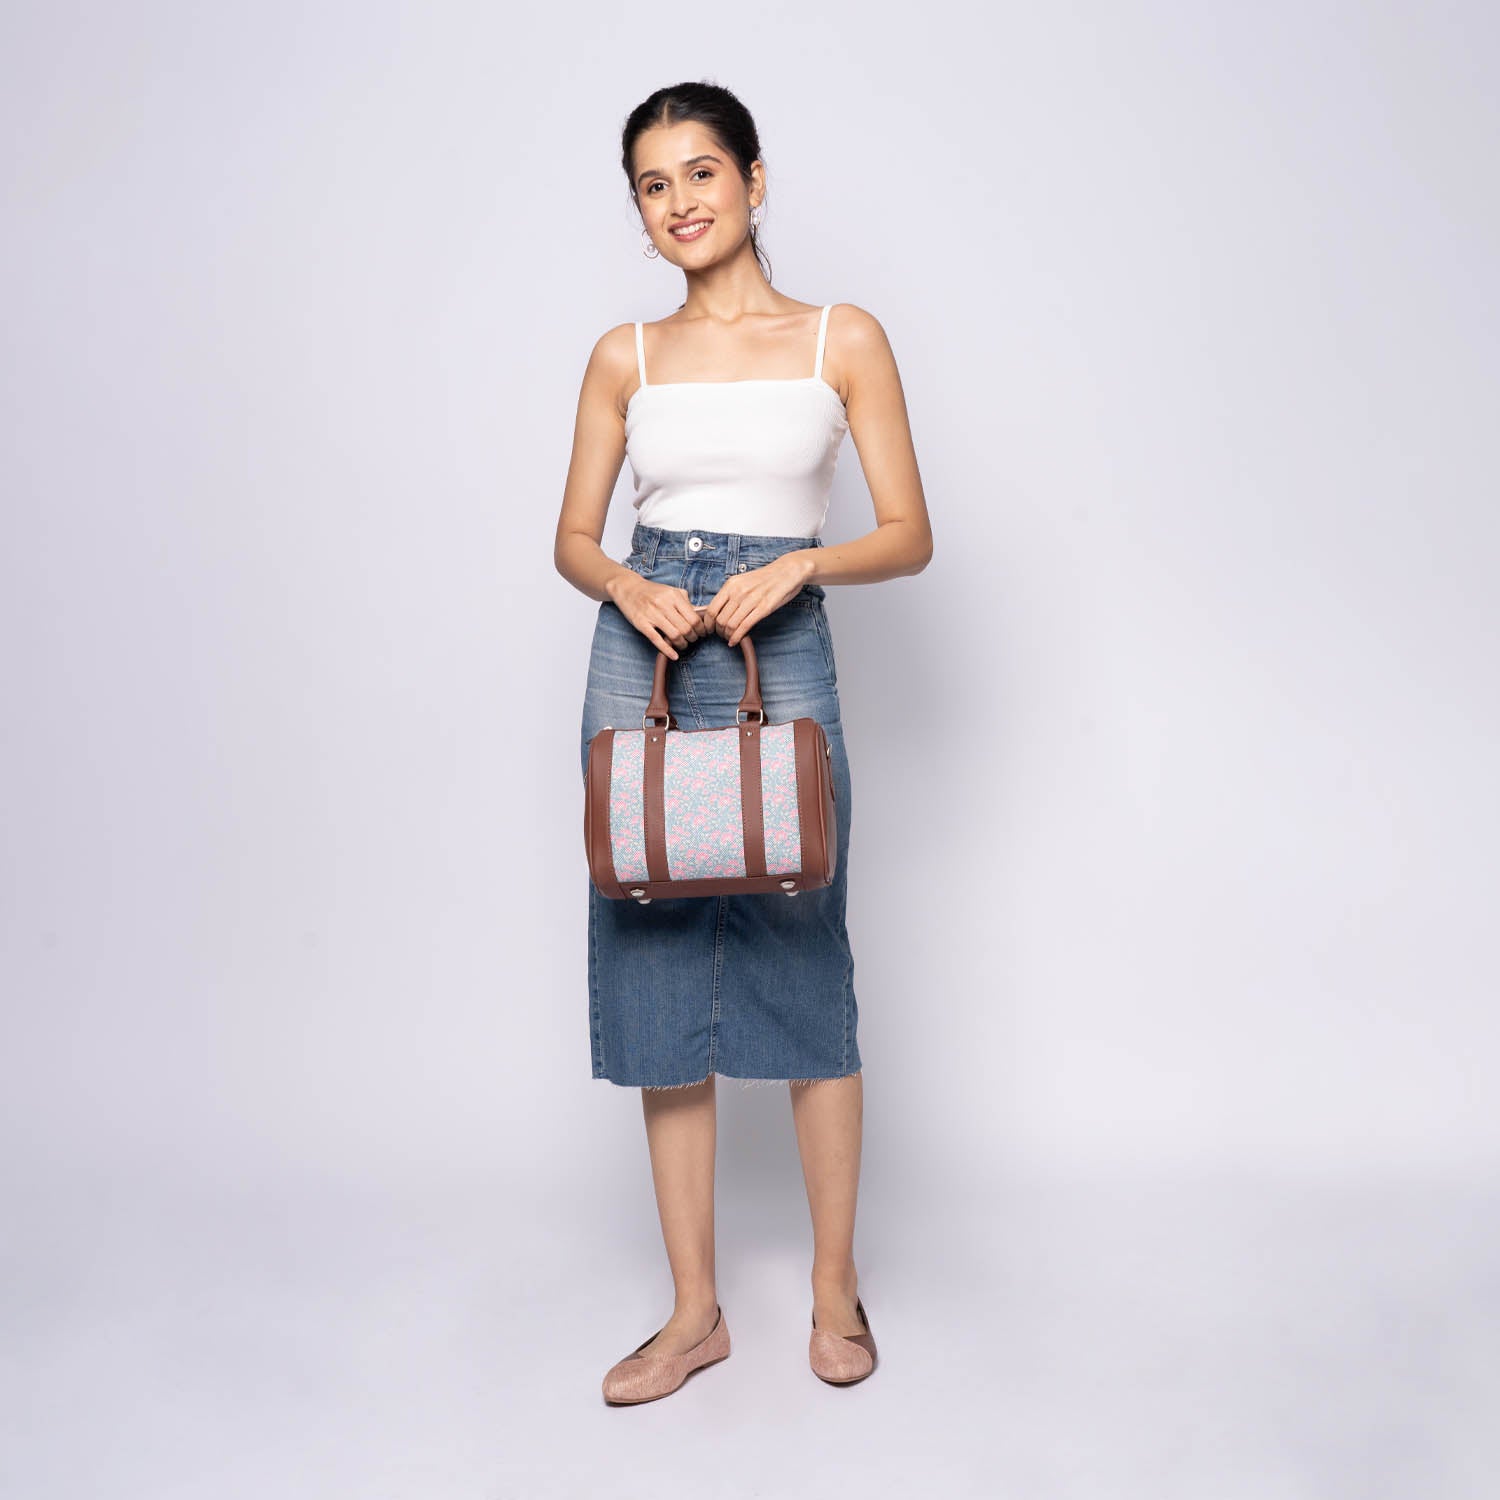 GENEMA Fashion​ Hasp Ladies Straw Weave Handbags Summer Beach Female Rattan Small  Purse - Walmart.com